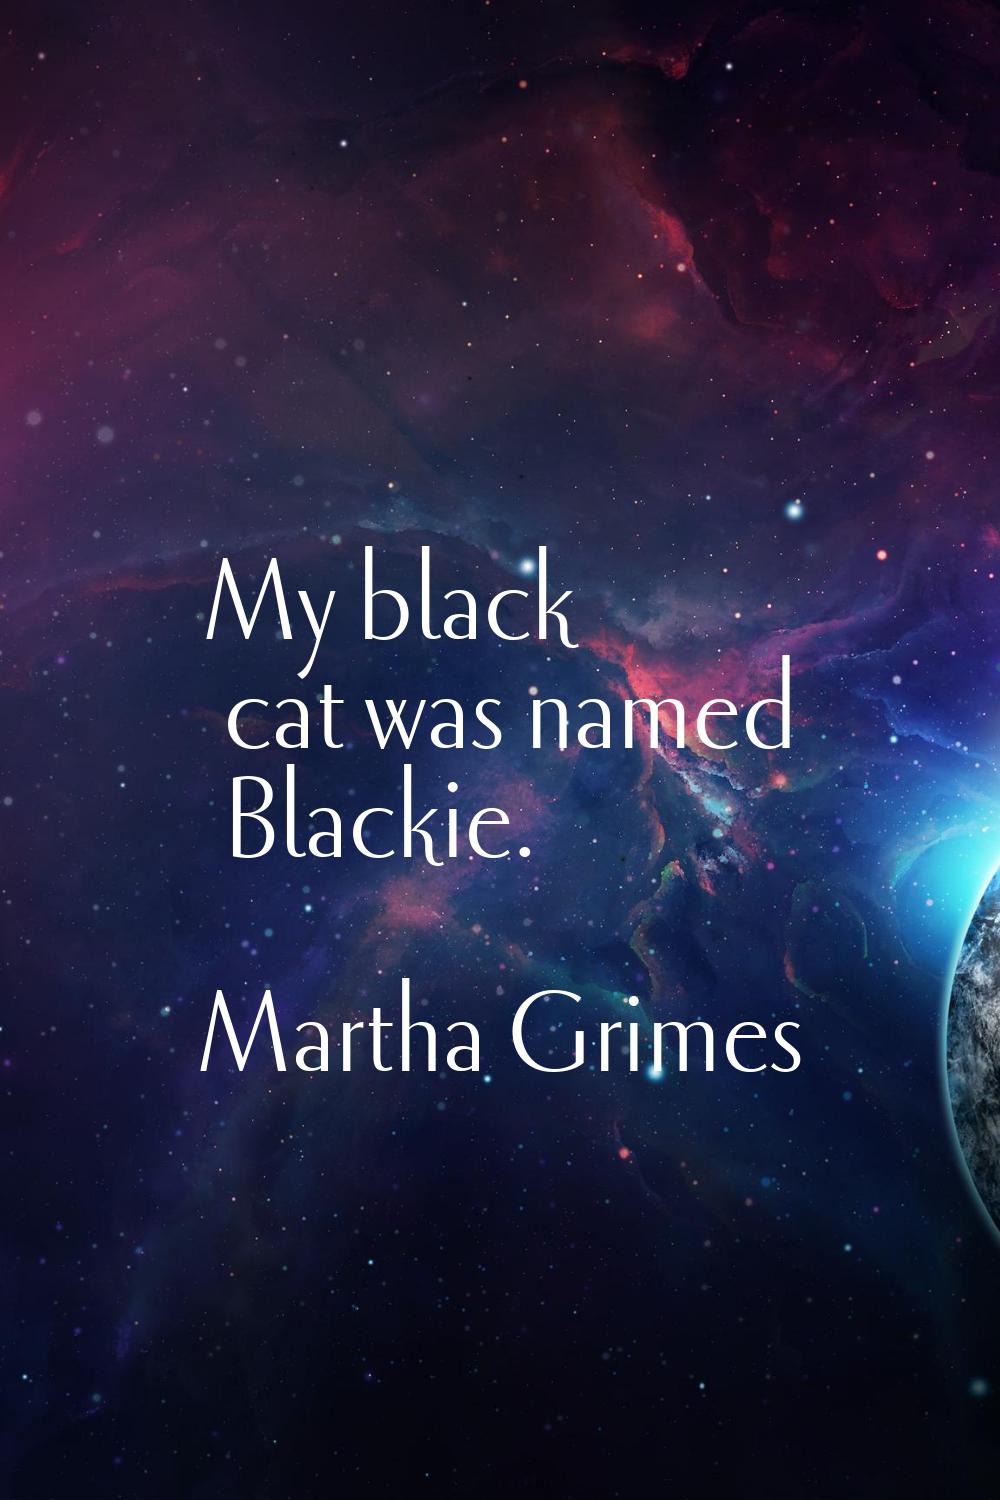 My black cat was named Blackie.